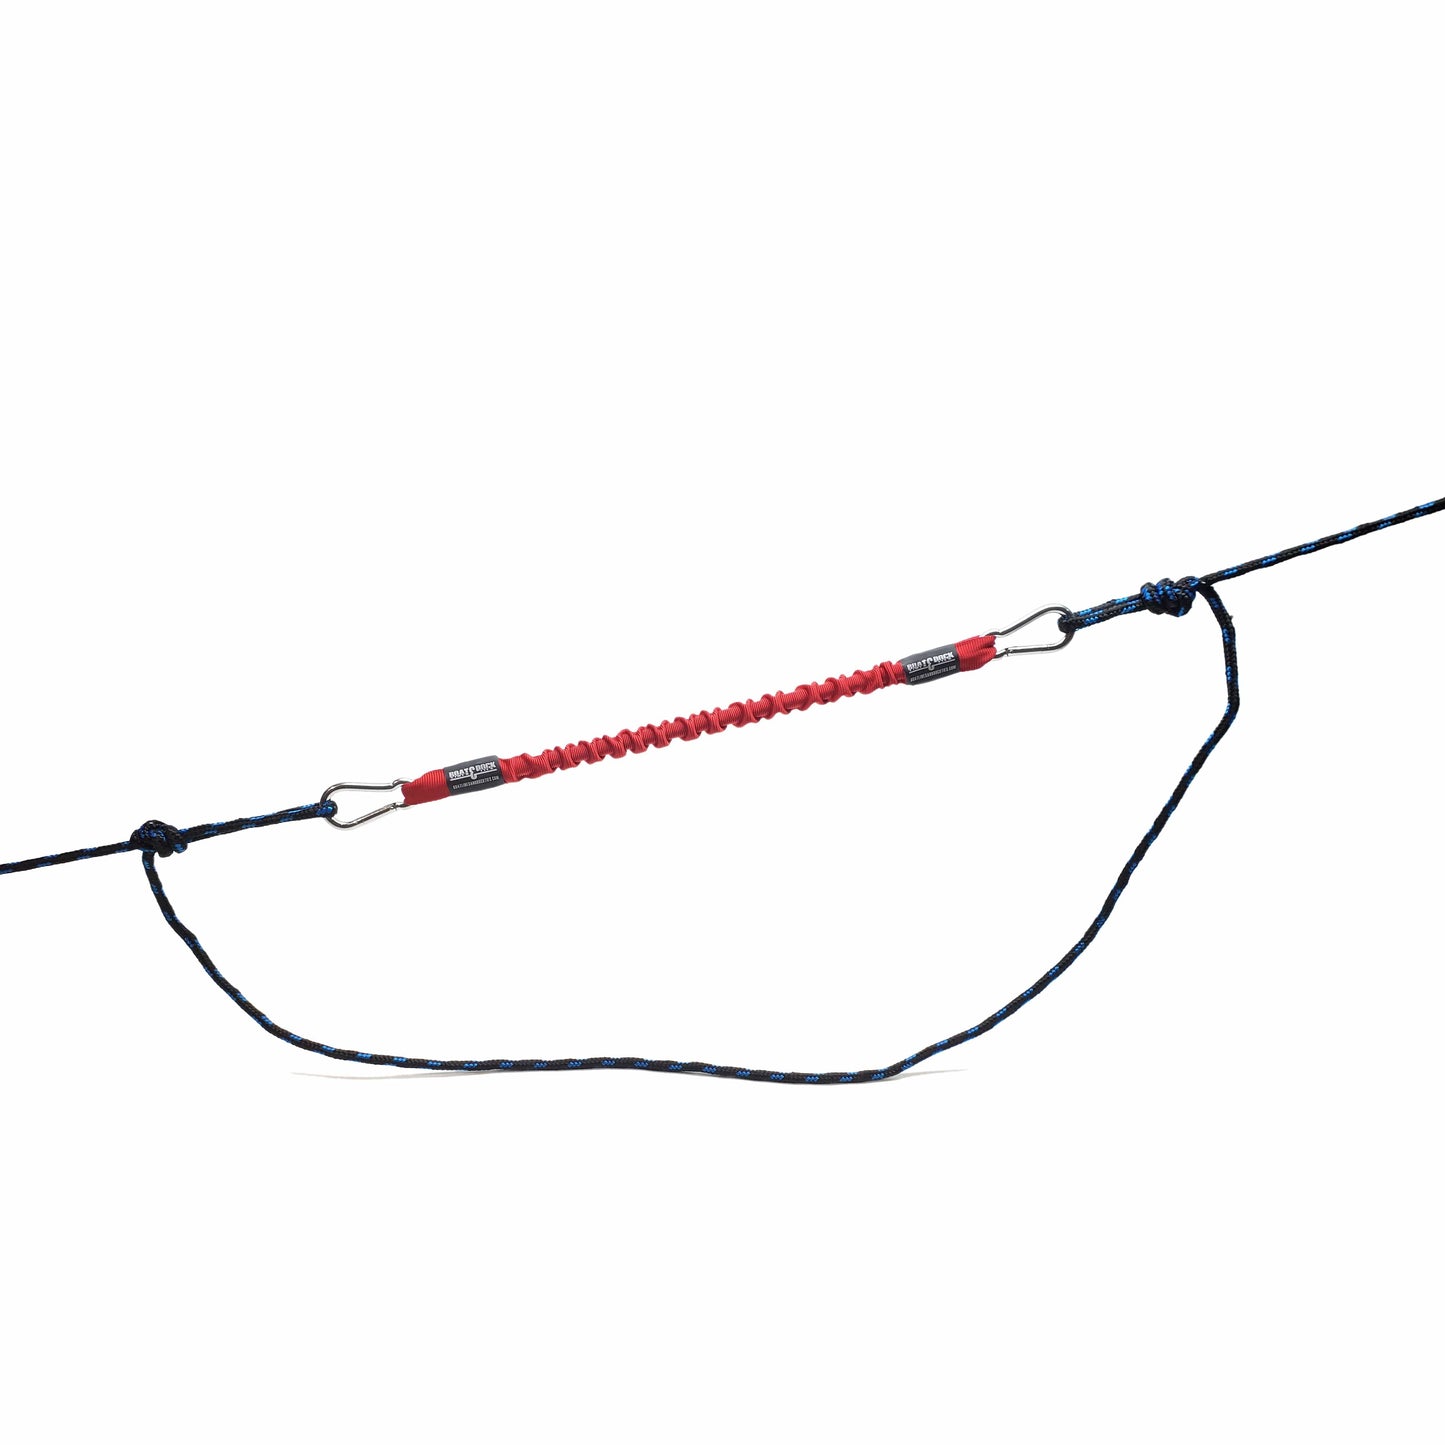 Bungee Snubber Dock Tie Line - With Stainless Steel Hooks - 1 per pack - Boat Lines & Dock Ties Boat Lines & Dock Ties 24inch / Red